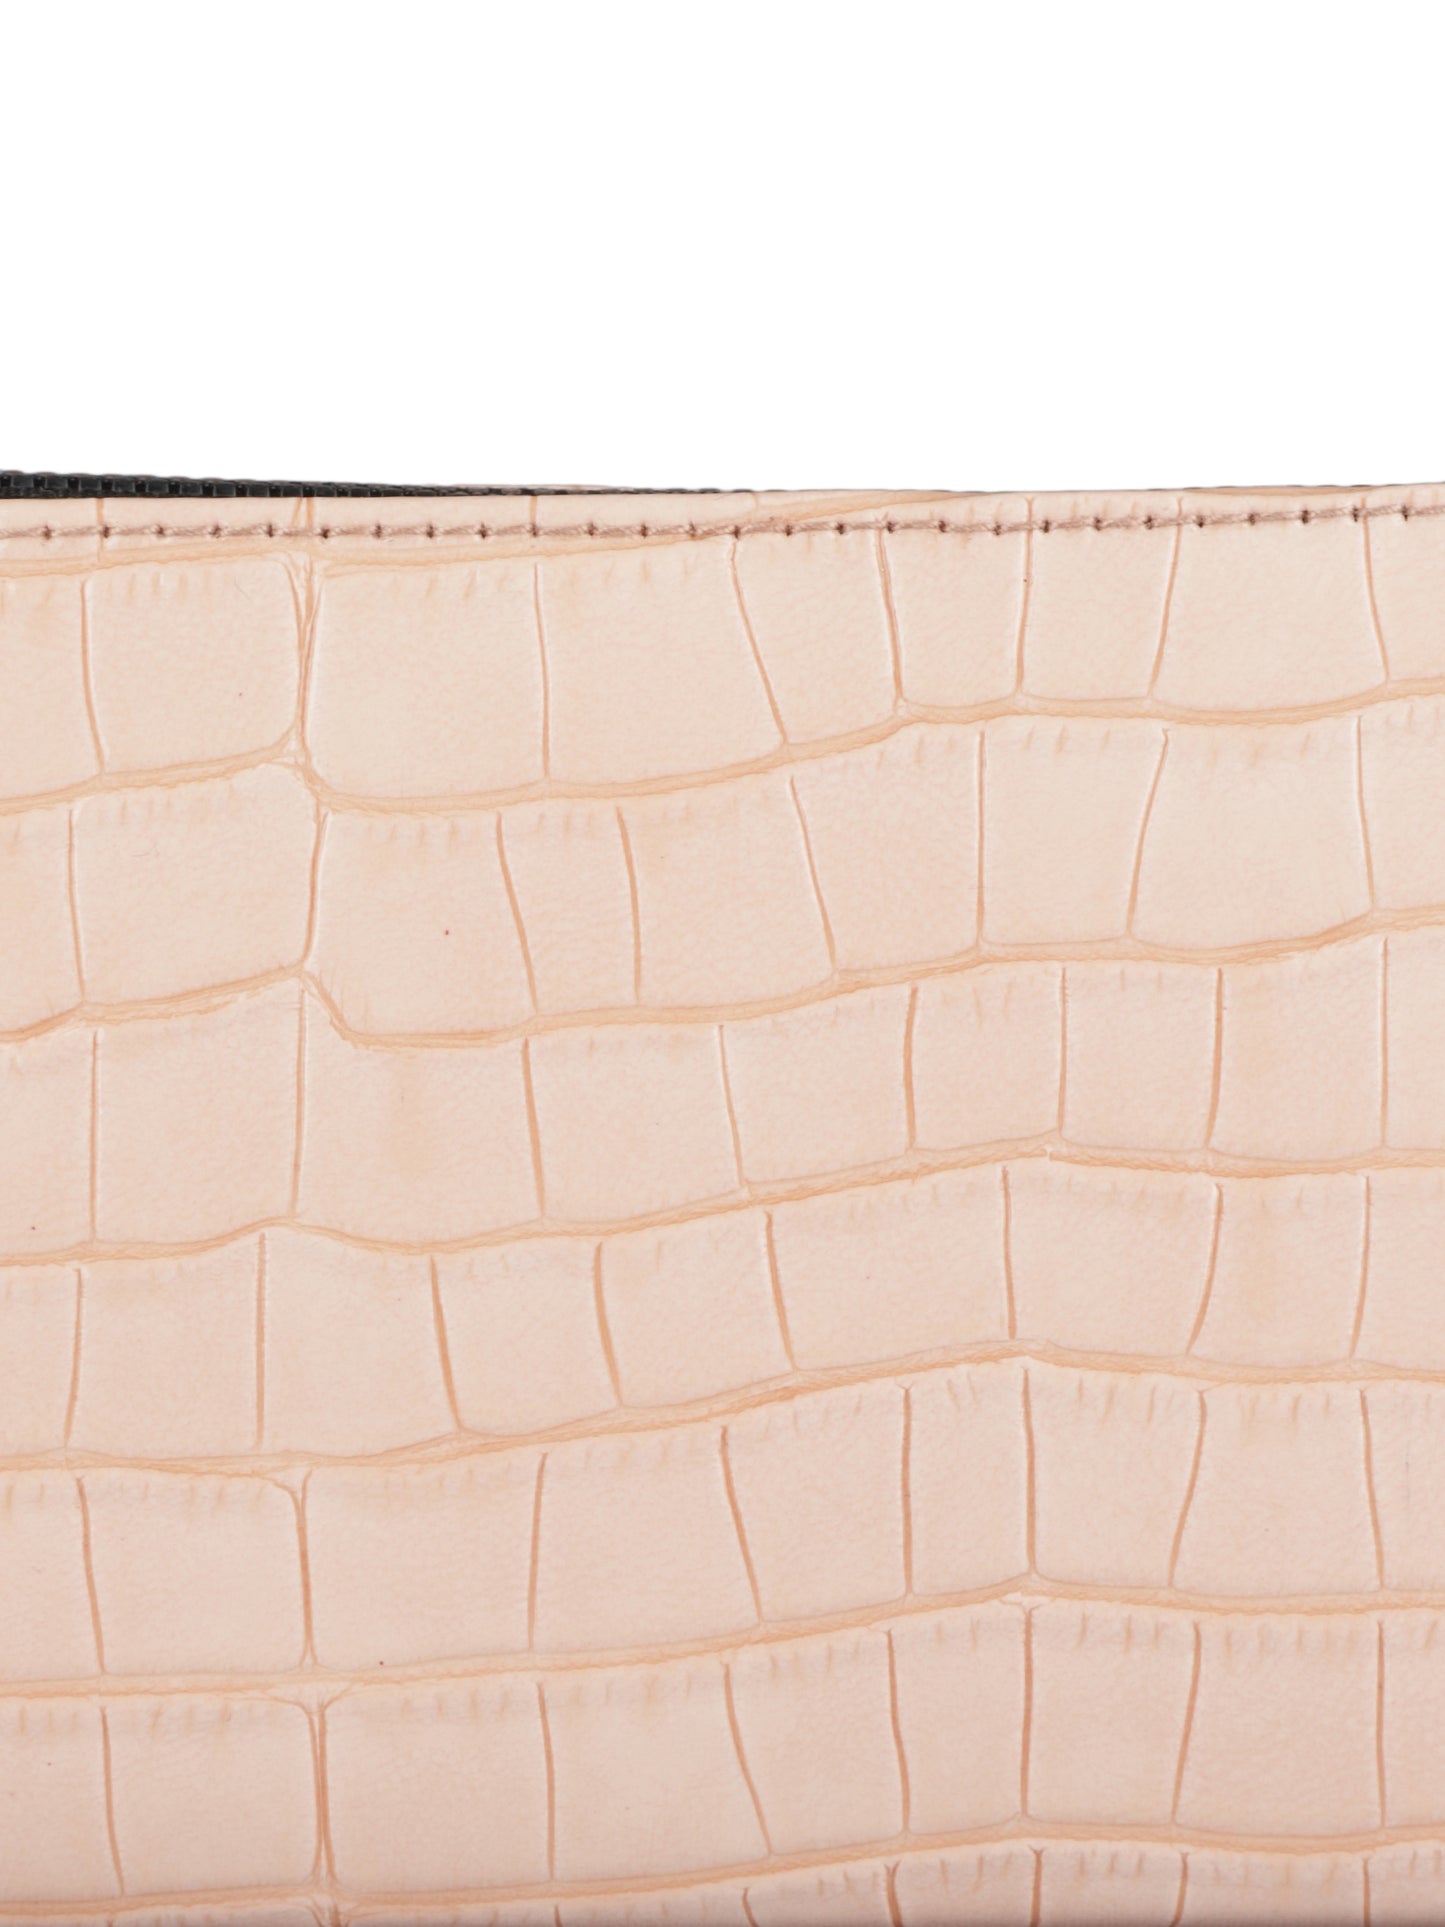 MINI WESST Women's Pink Handbags(MWWL005PK)